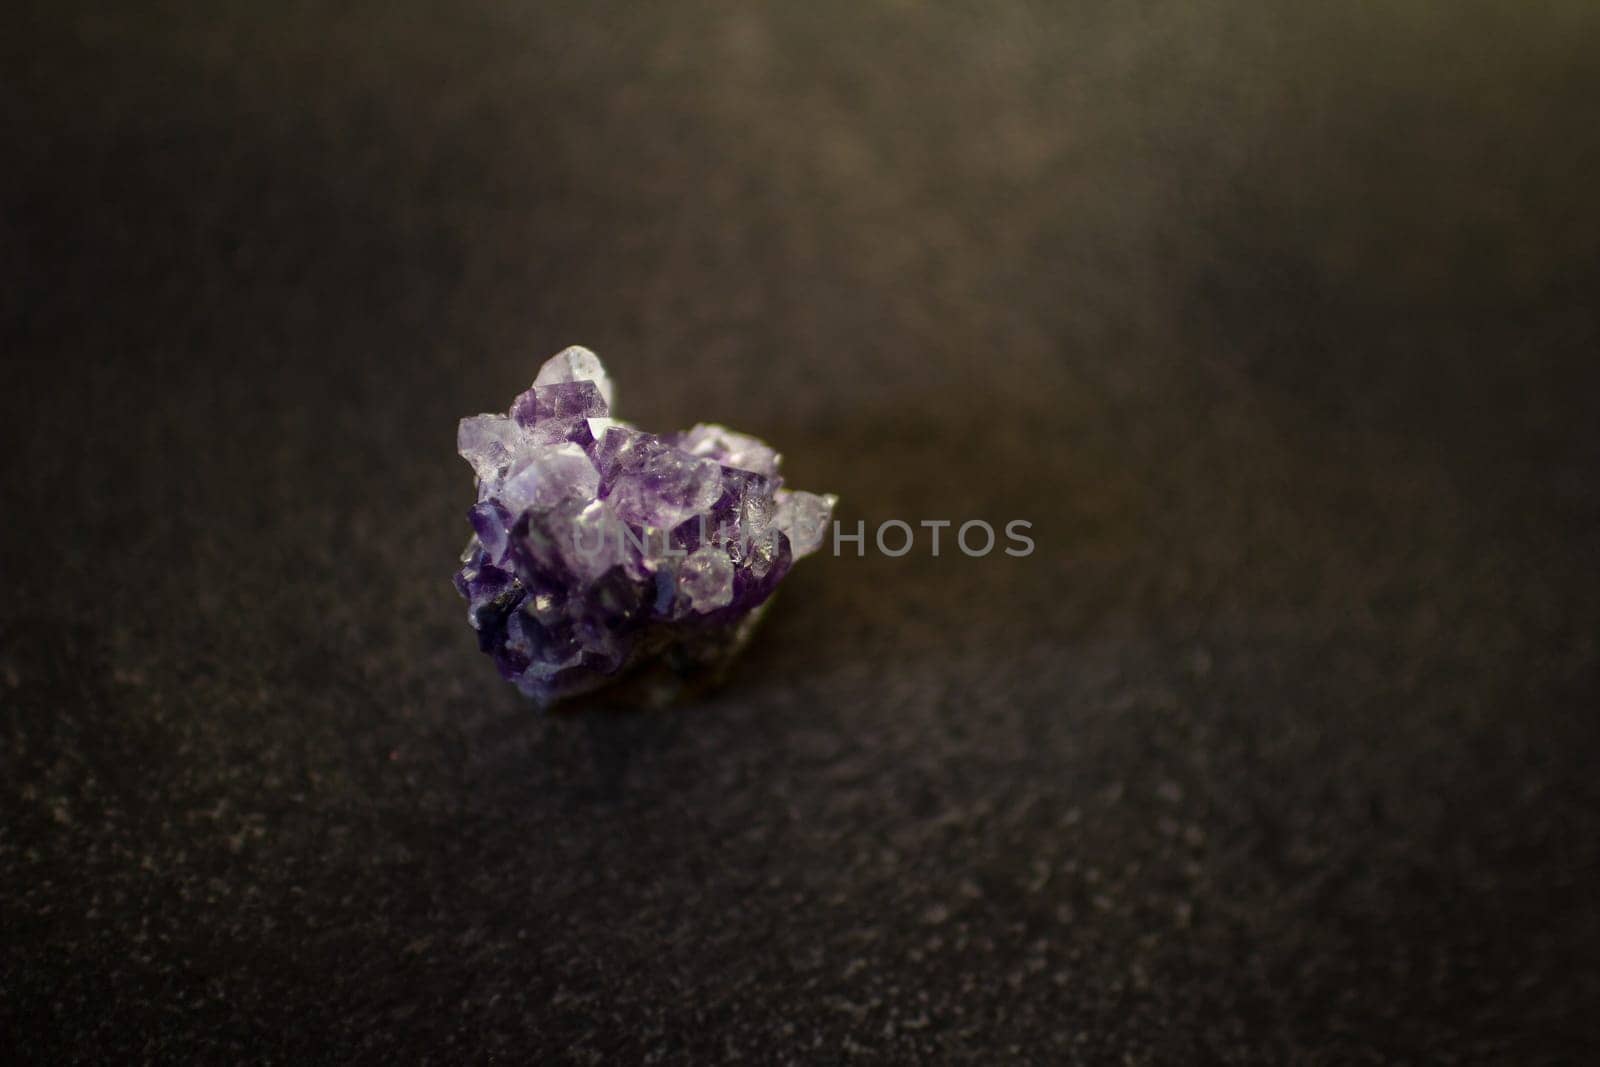 Violet amethyst quartz crystal on black background by VeronikaAngo